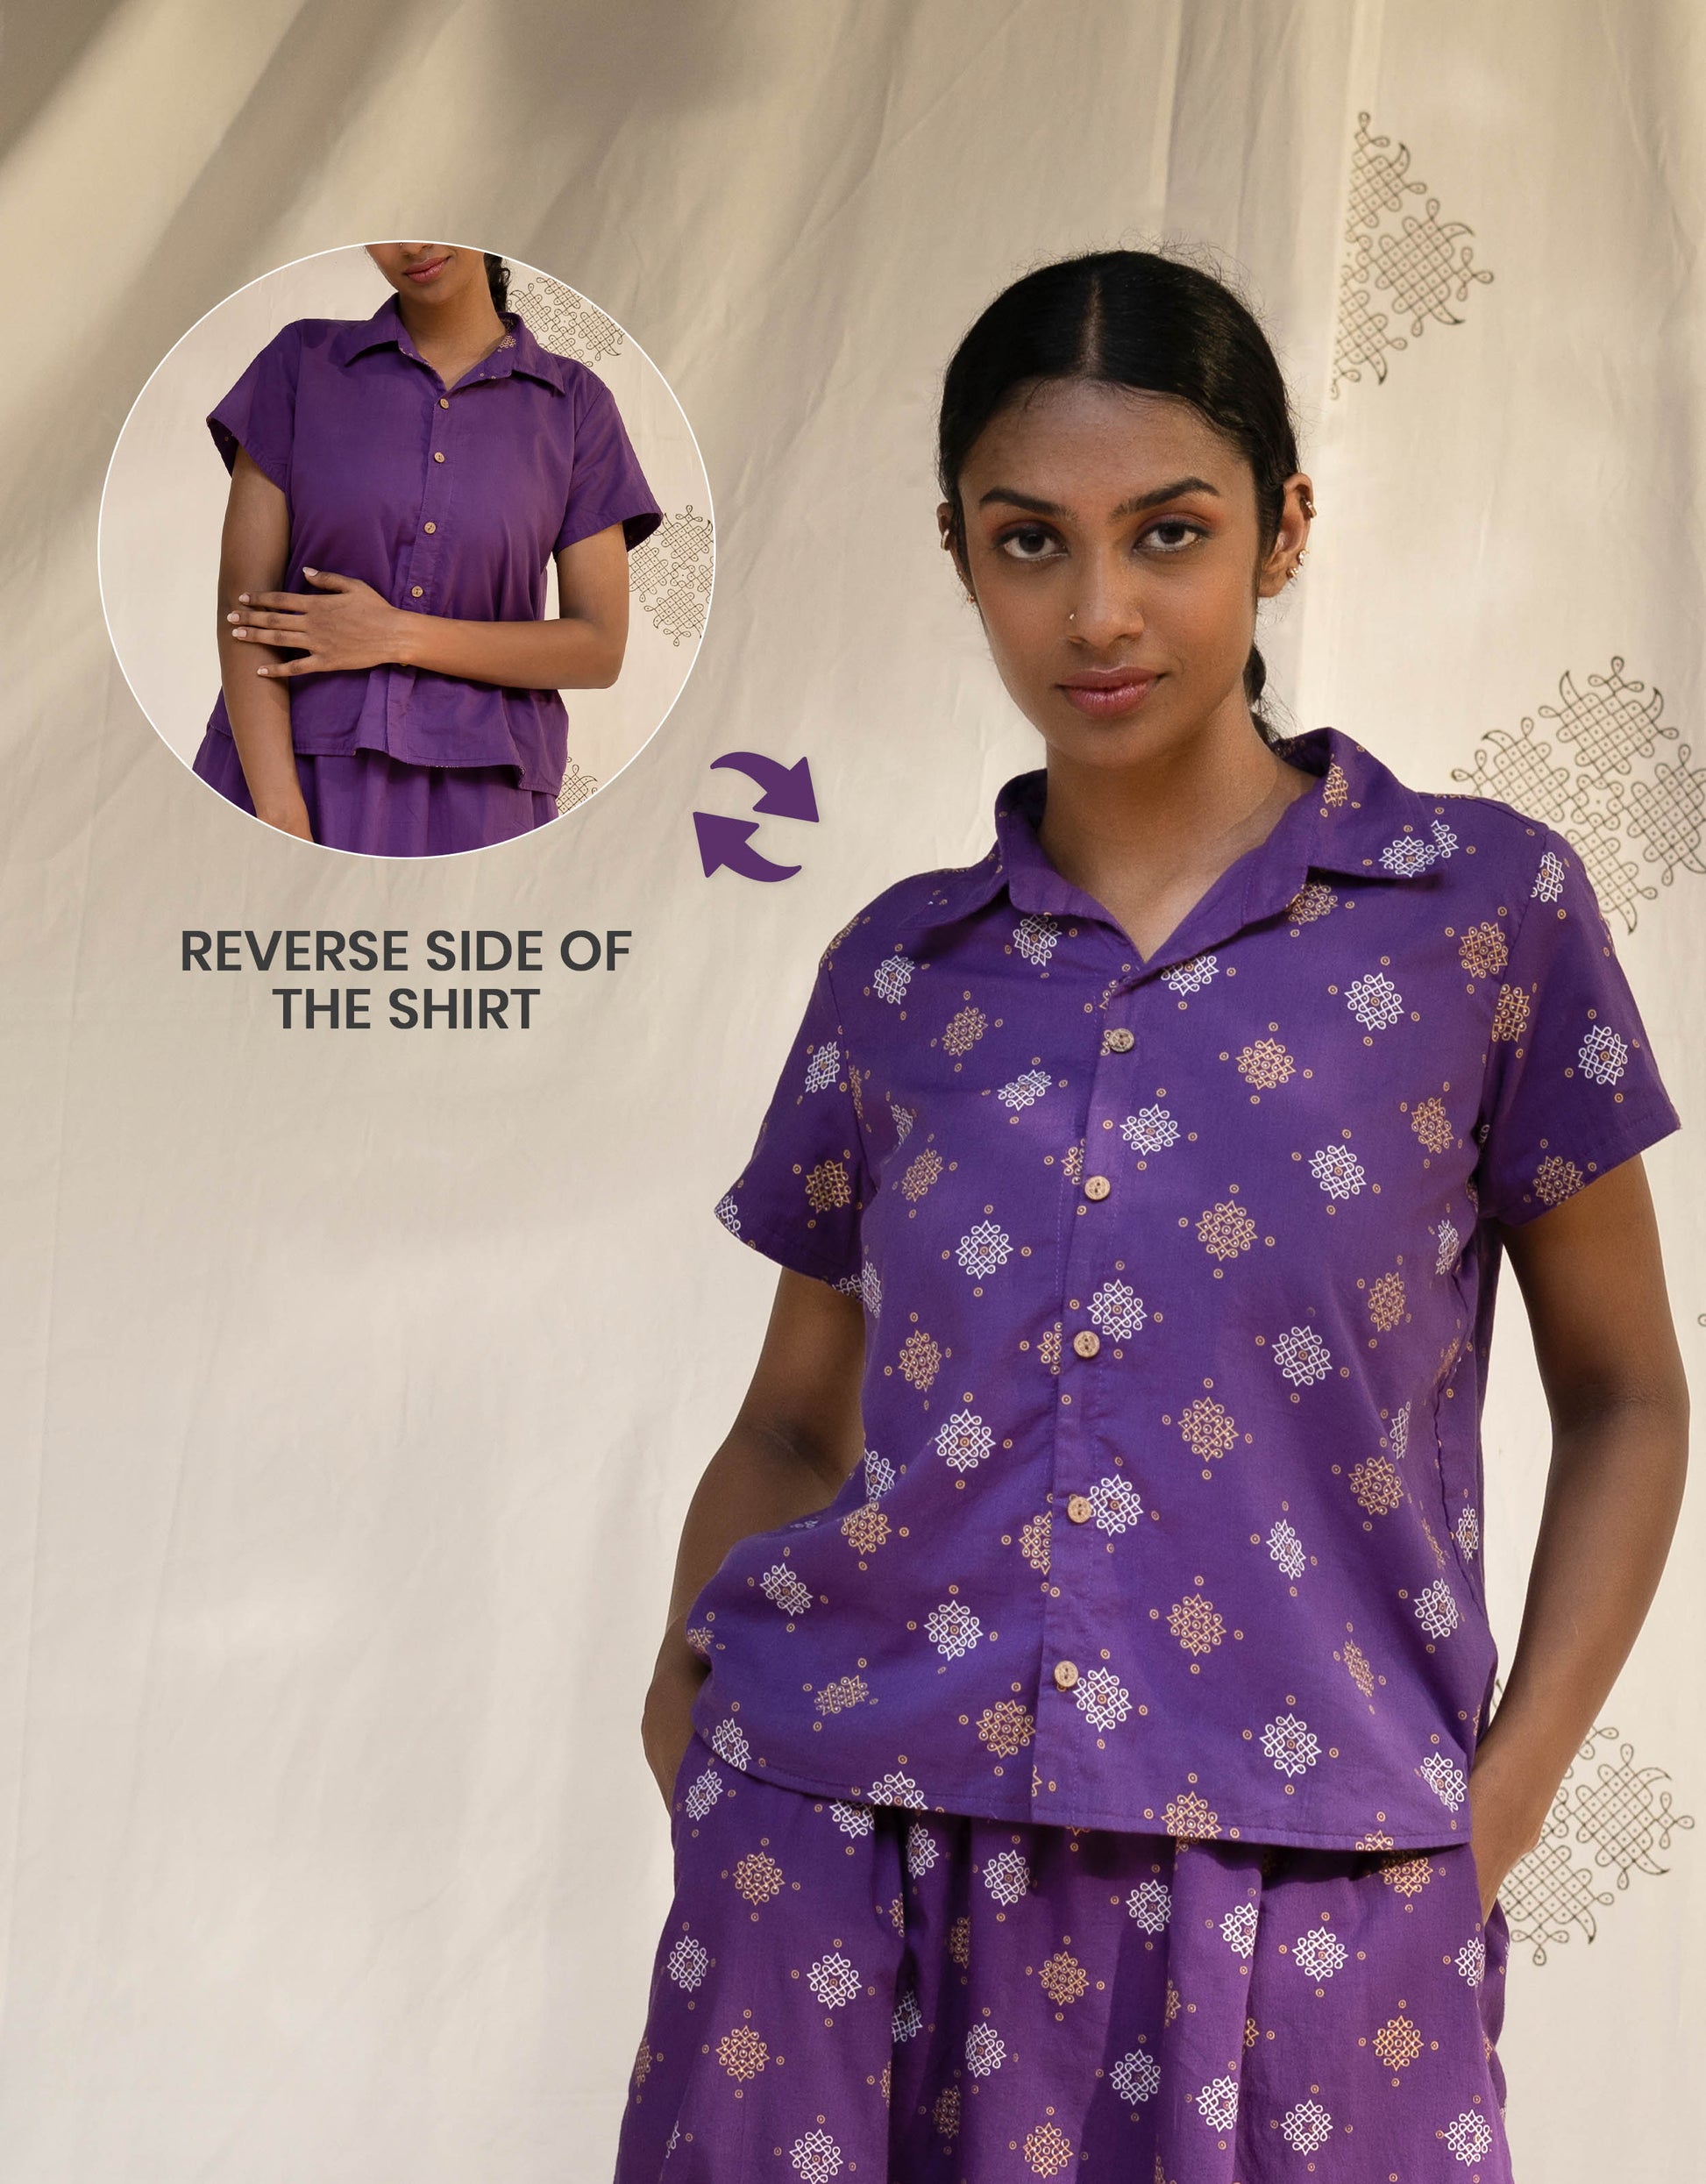 Front view of Hueloom's Reversible Shirt in Purple Kolam print showing versatile reversible option